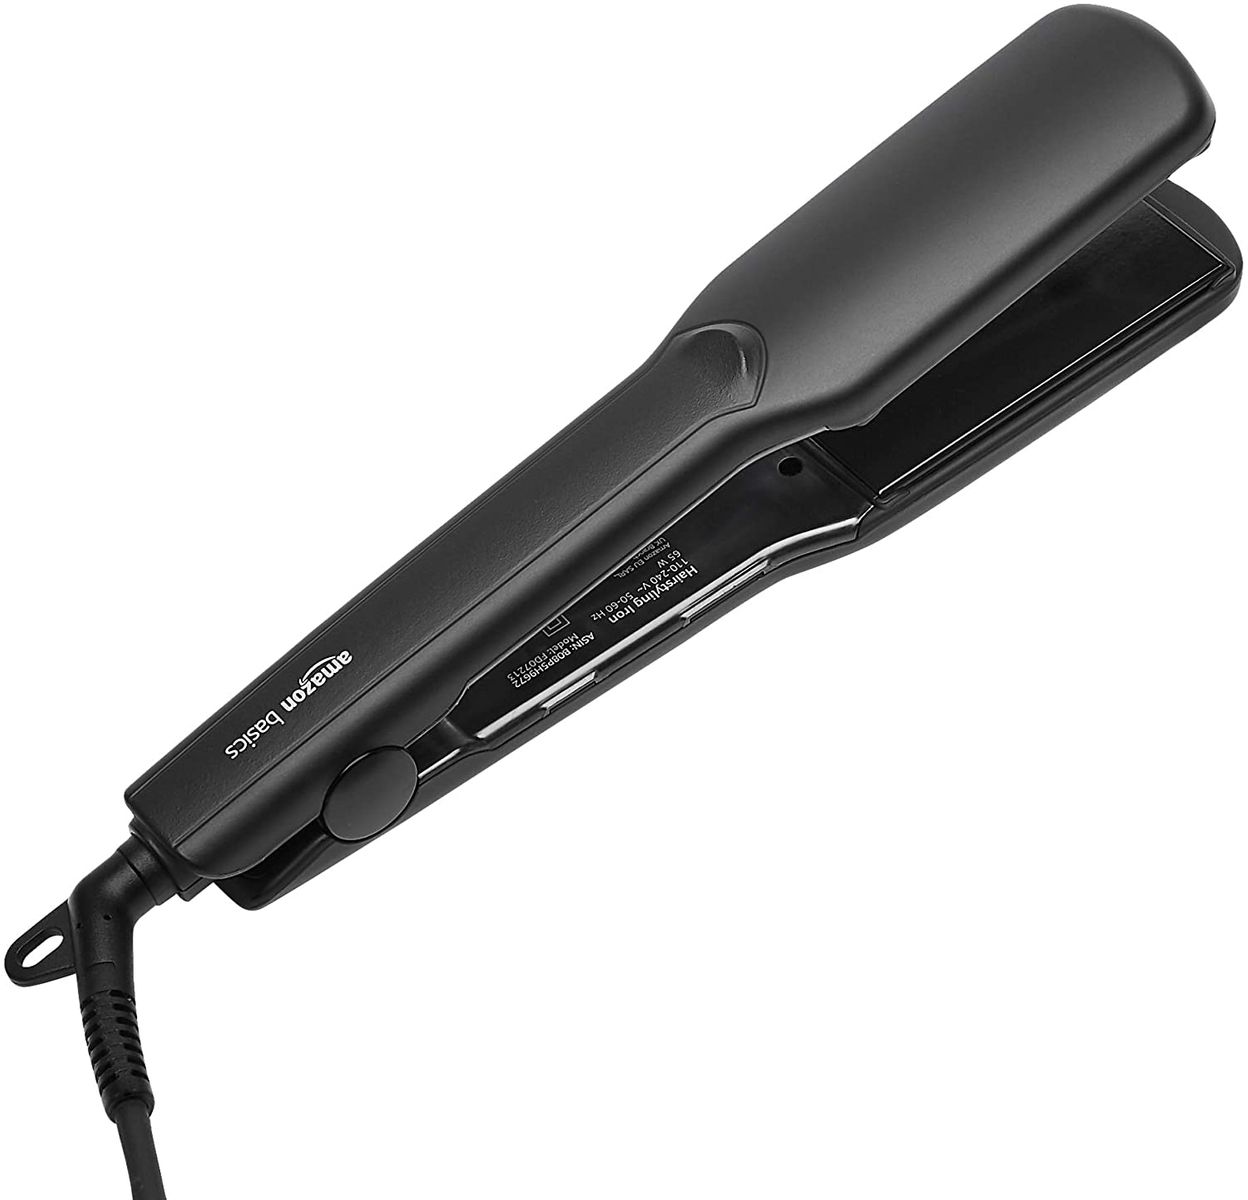 Amazon Basics Digital PTC Tourmaline Ceramic Hair Styling Iron with Auto Power Off Function, 3.2cm, Black